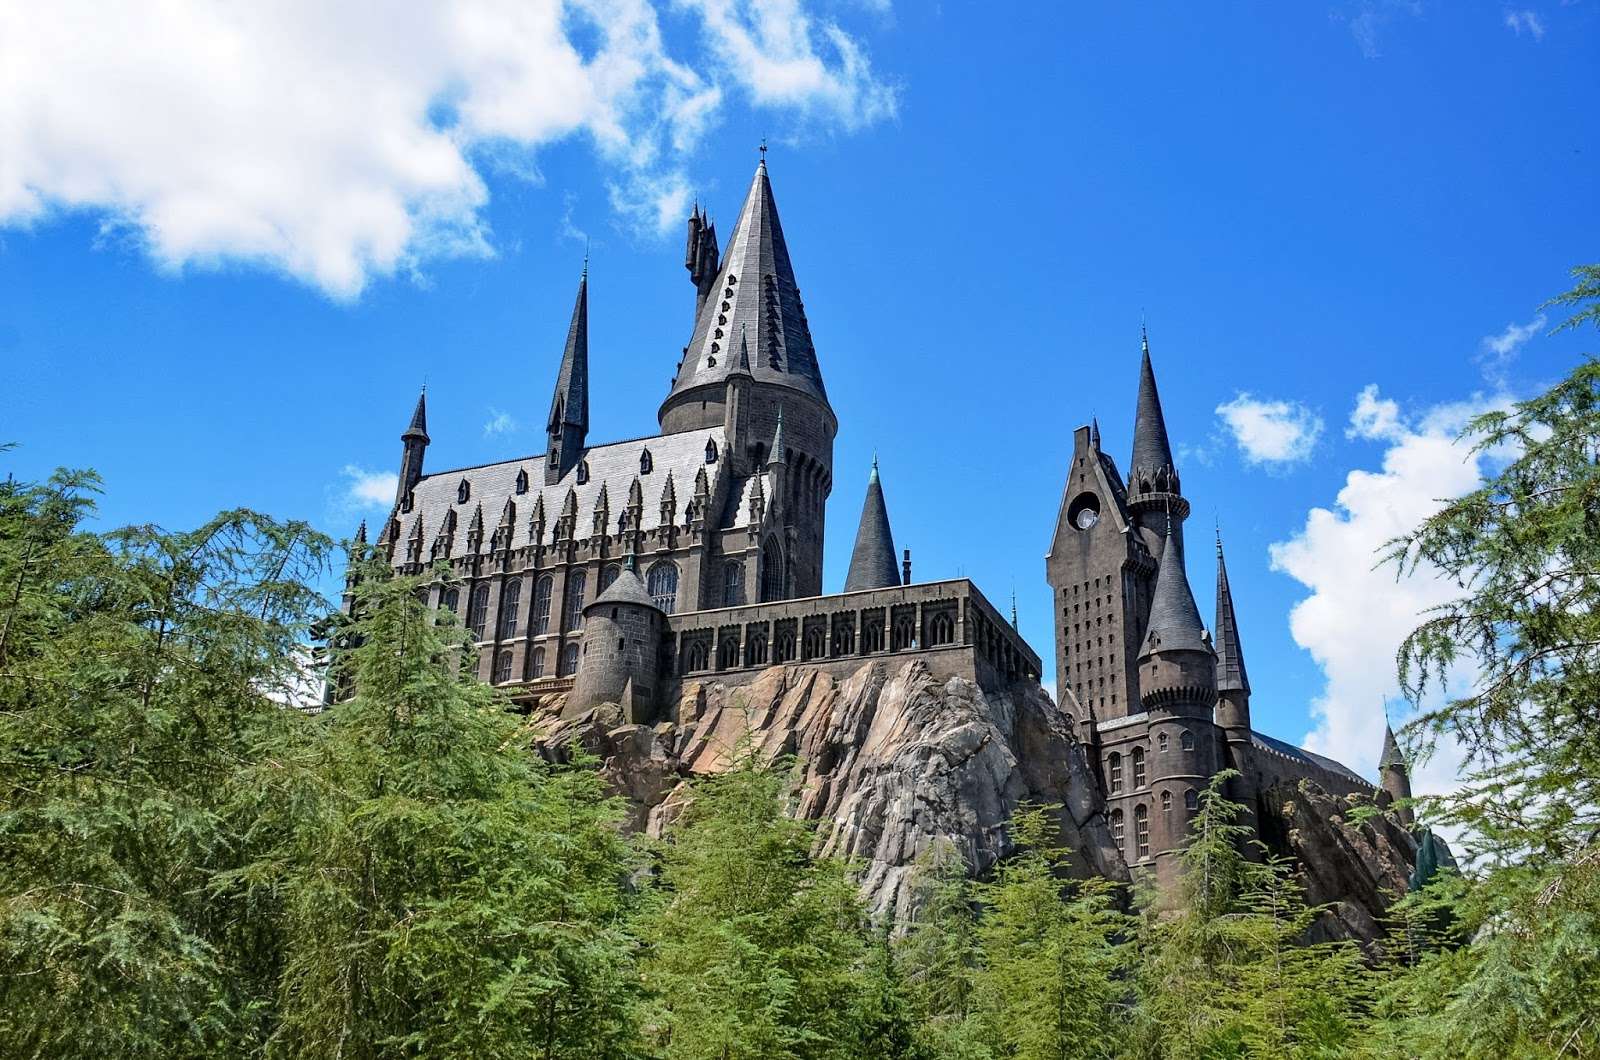 The Wizarding World of Harry Potter at Universal Studios Orlando ...